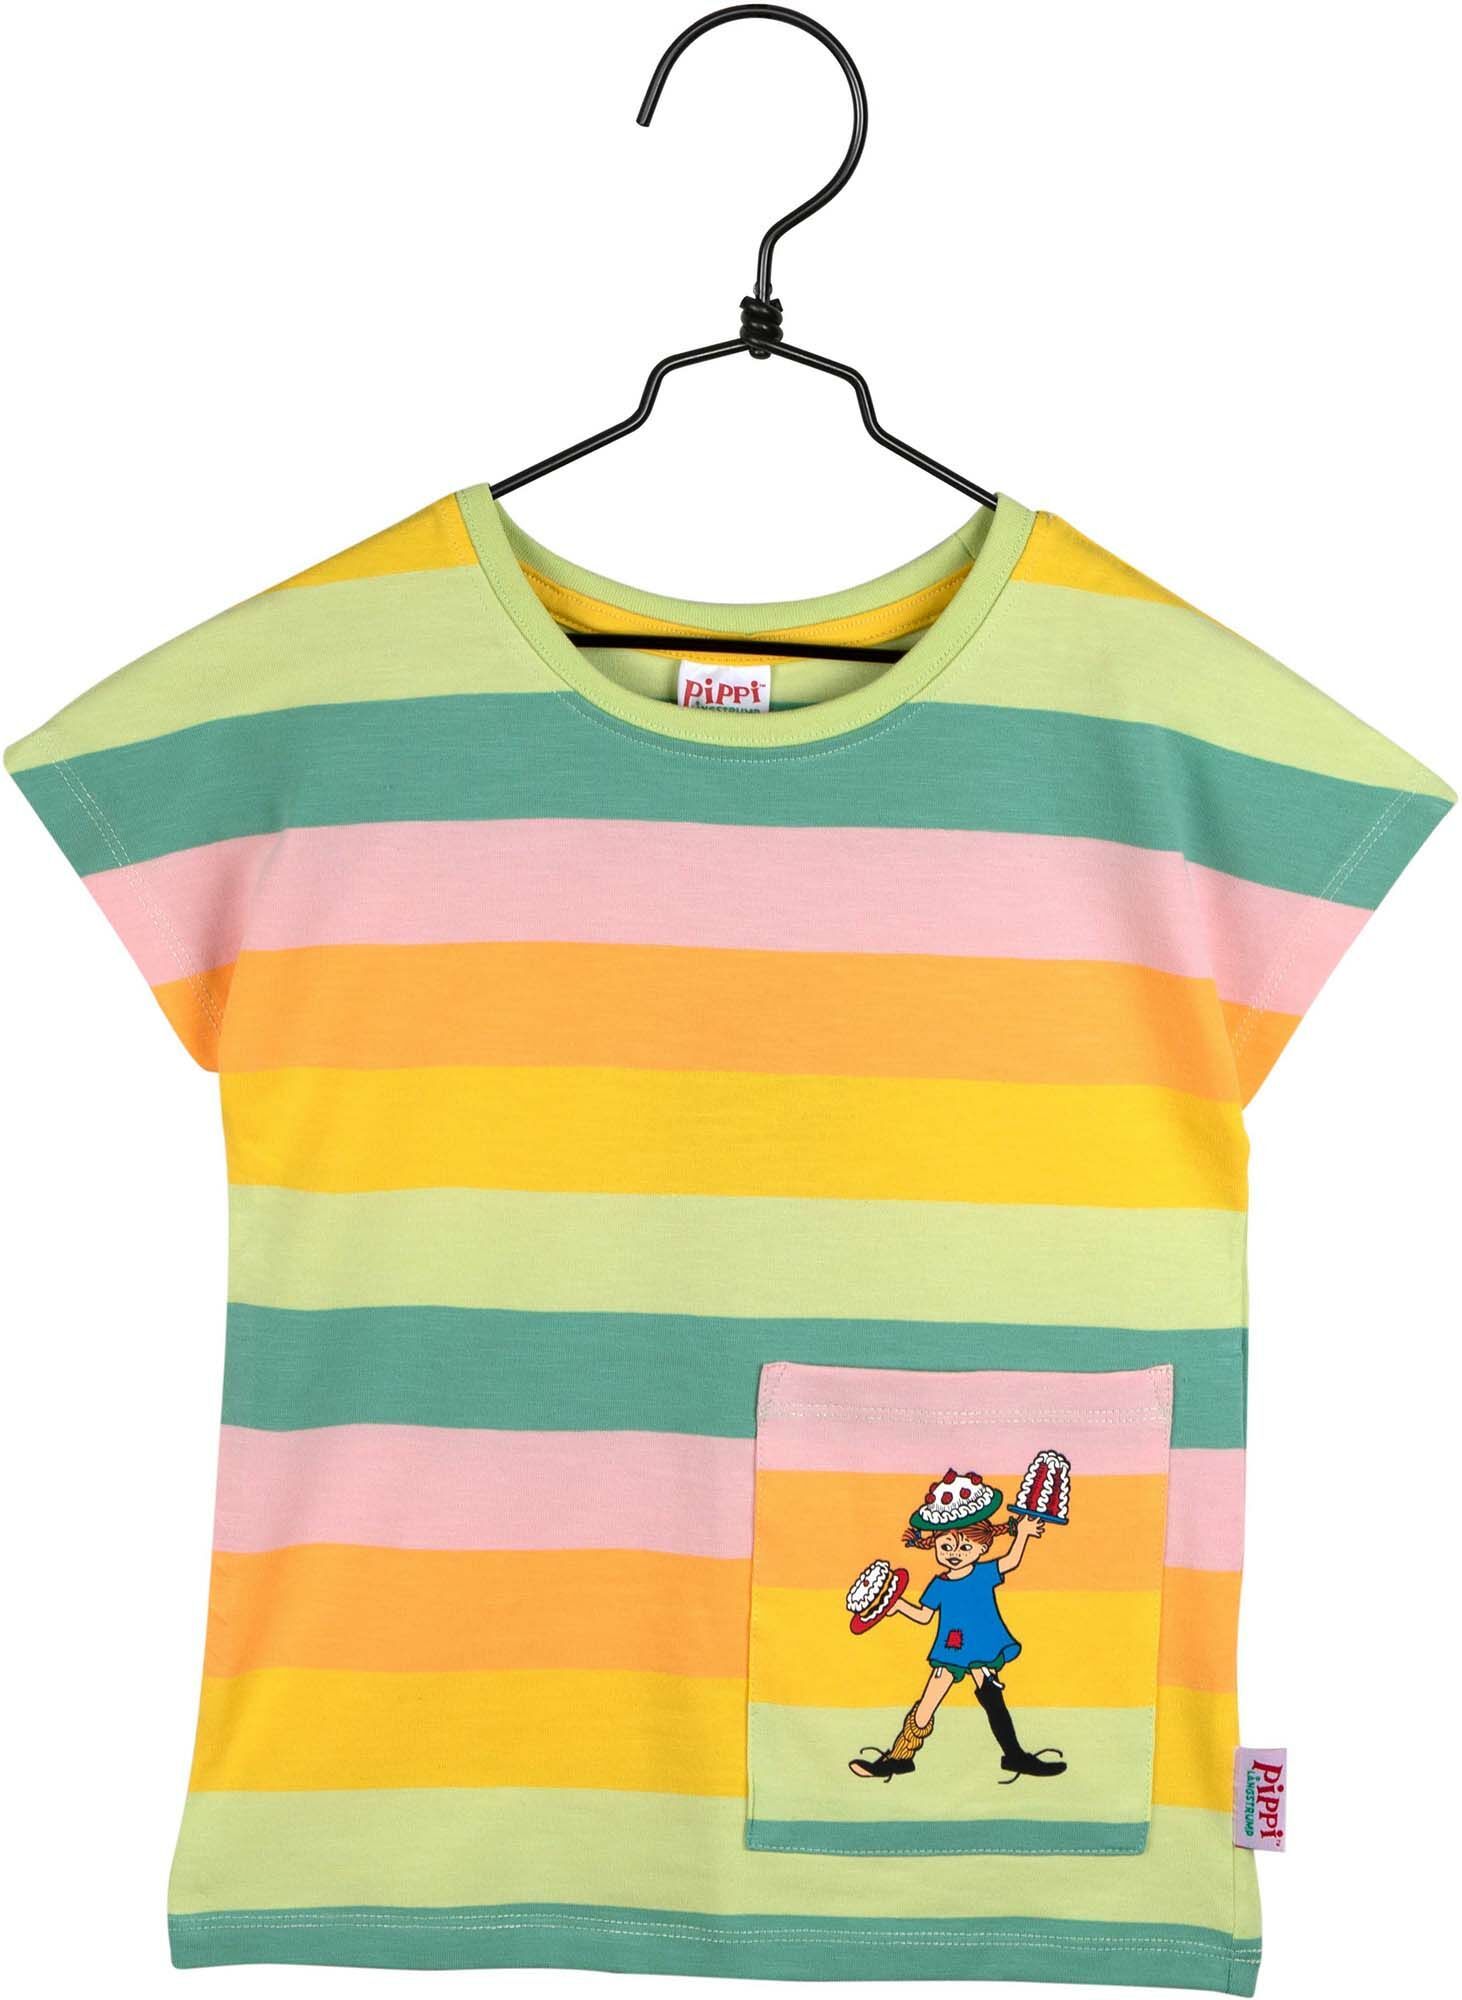 Pippi Långstrump Regnbåge T-Shirt Grön 86